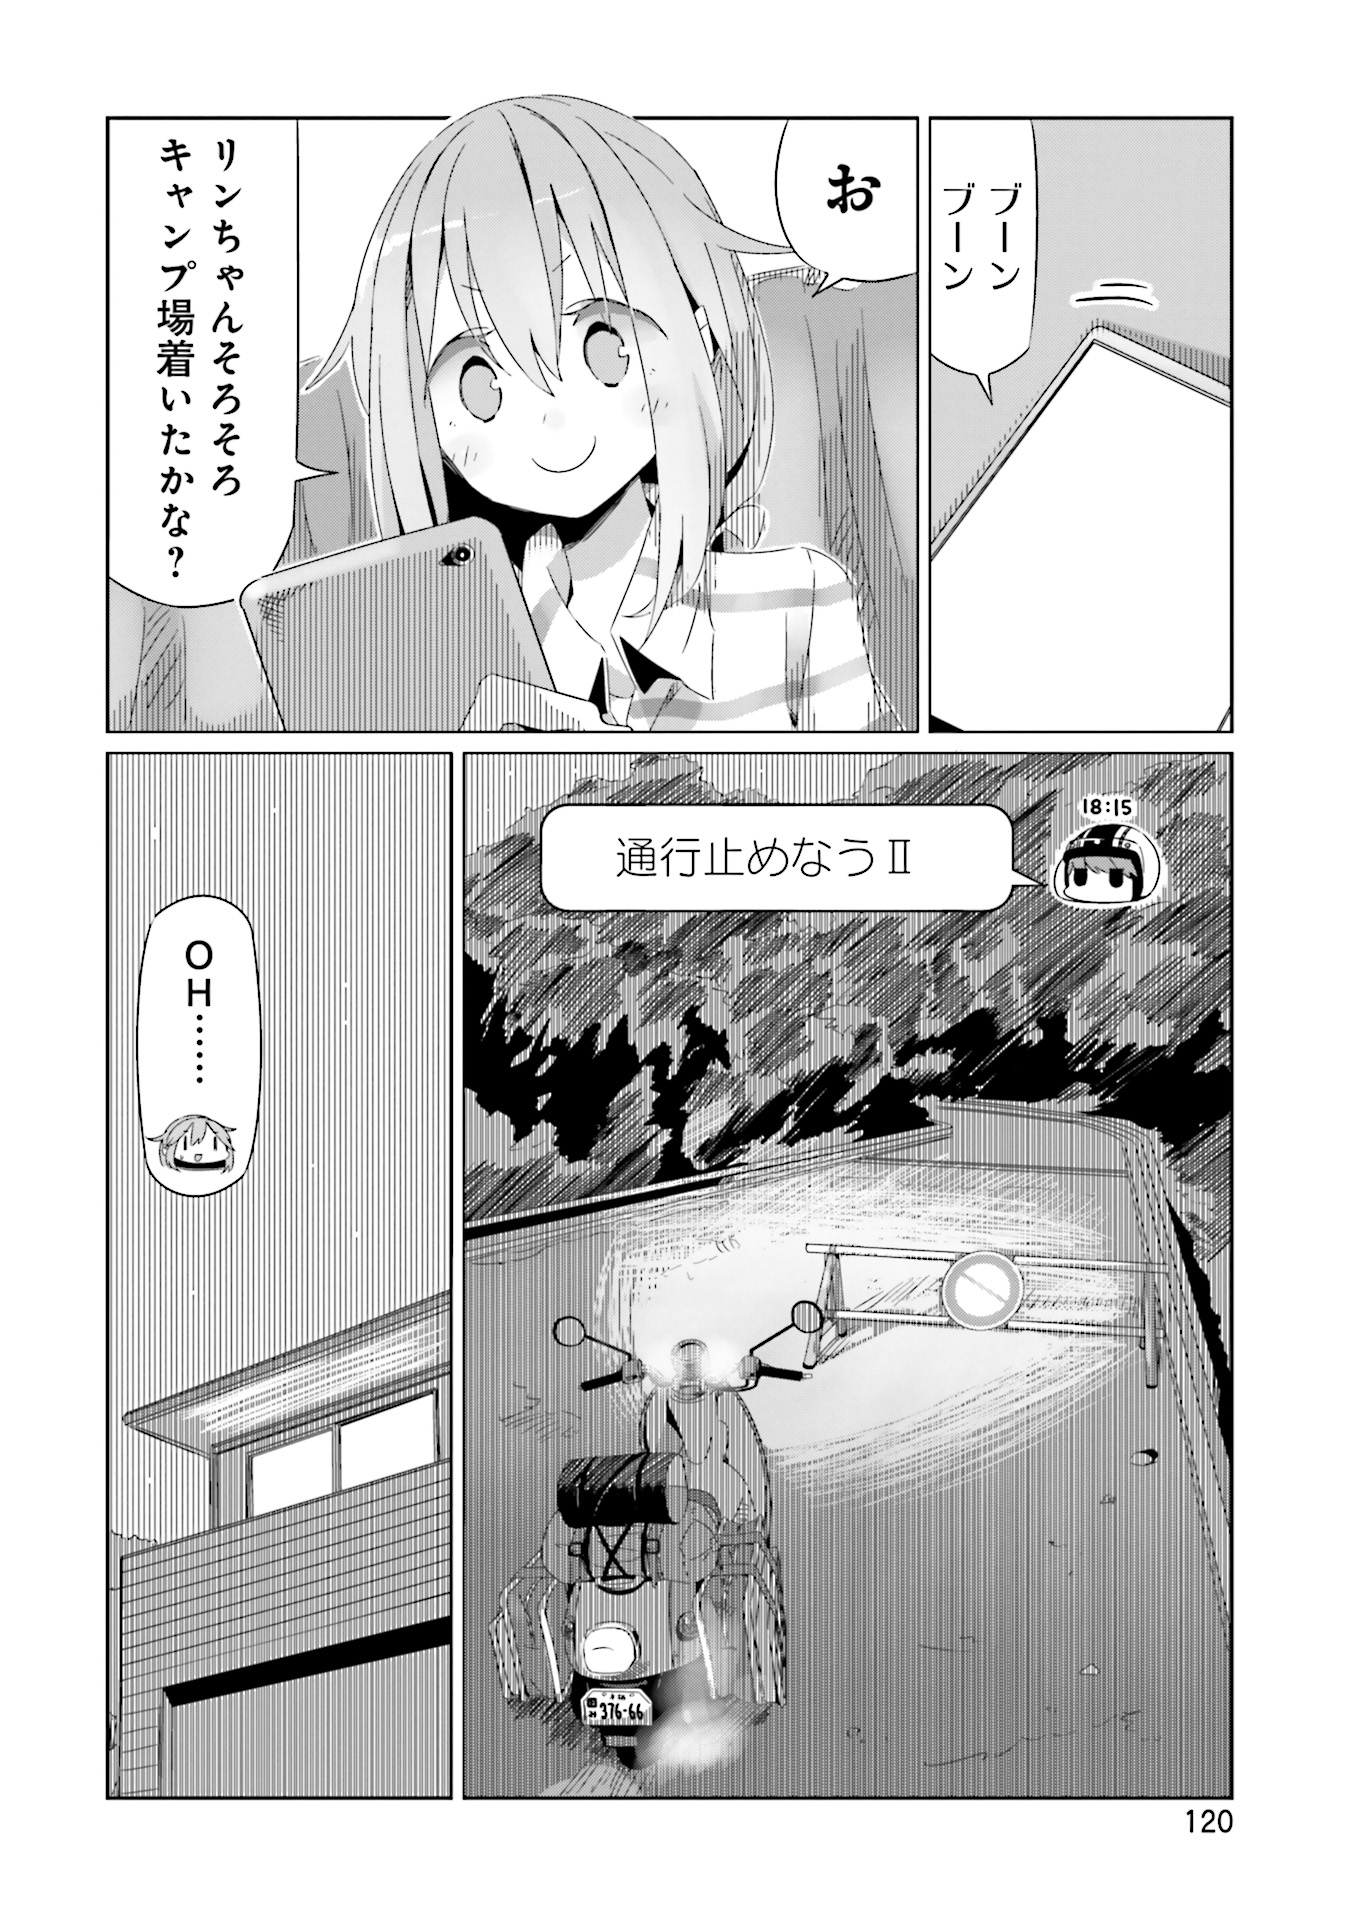 Yuru Camp - Chapter 17 - Page 28